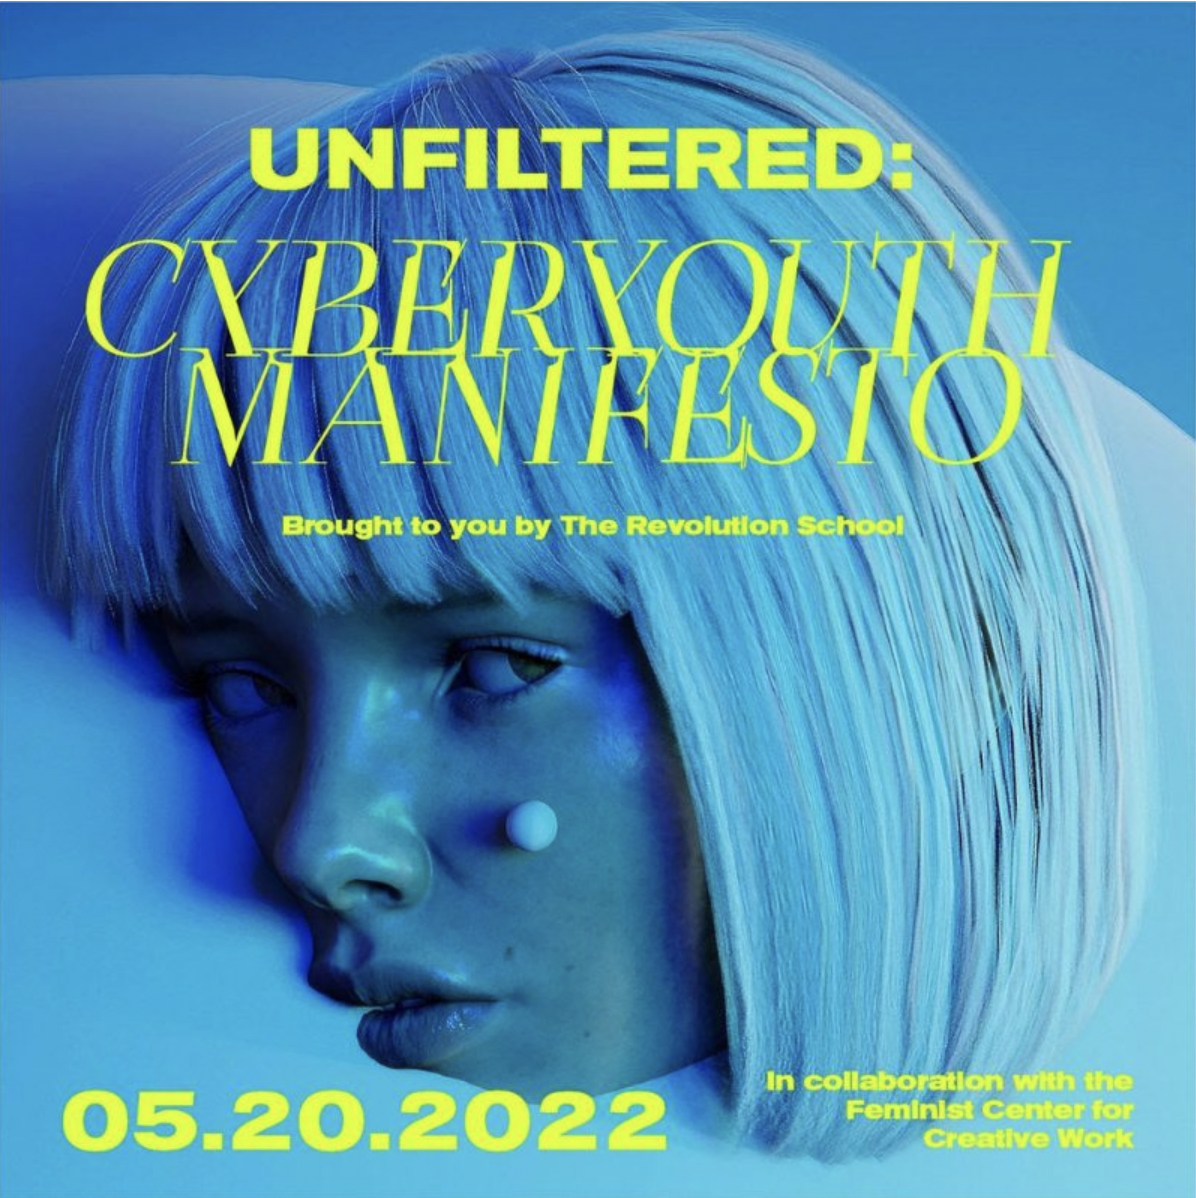 Unfiltered: Cyberyouth Manifesto